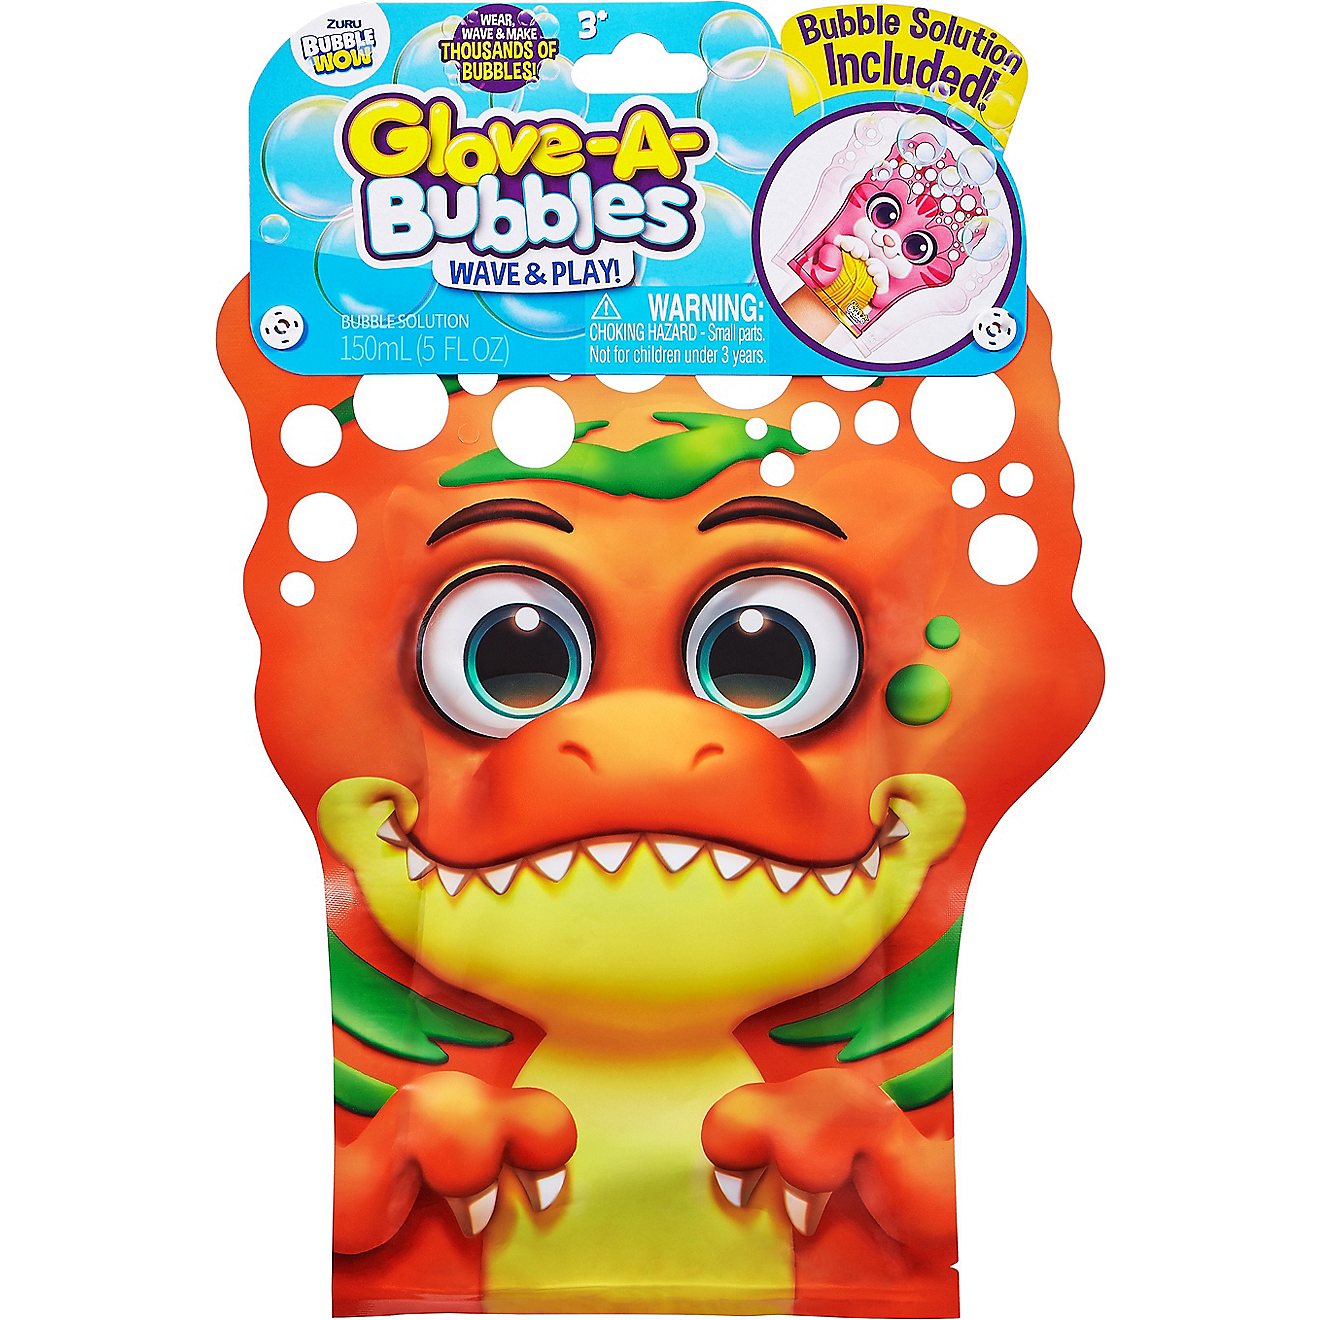 ZURU Bubble Wow Glove A Bubbles Toy                                                                                              - view number 1